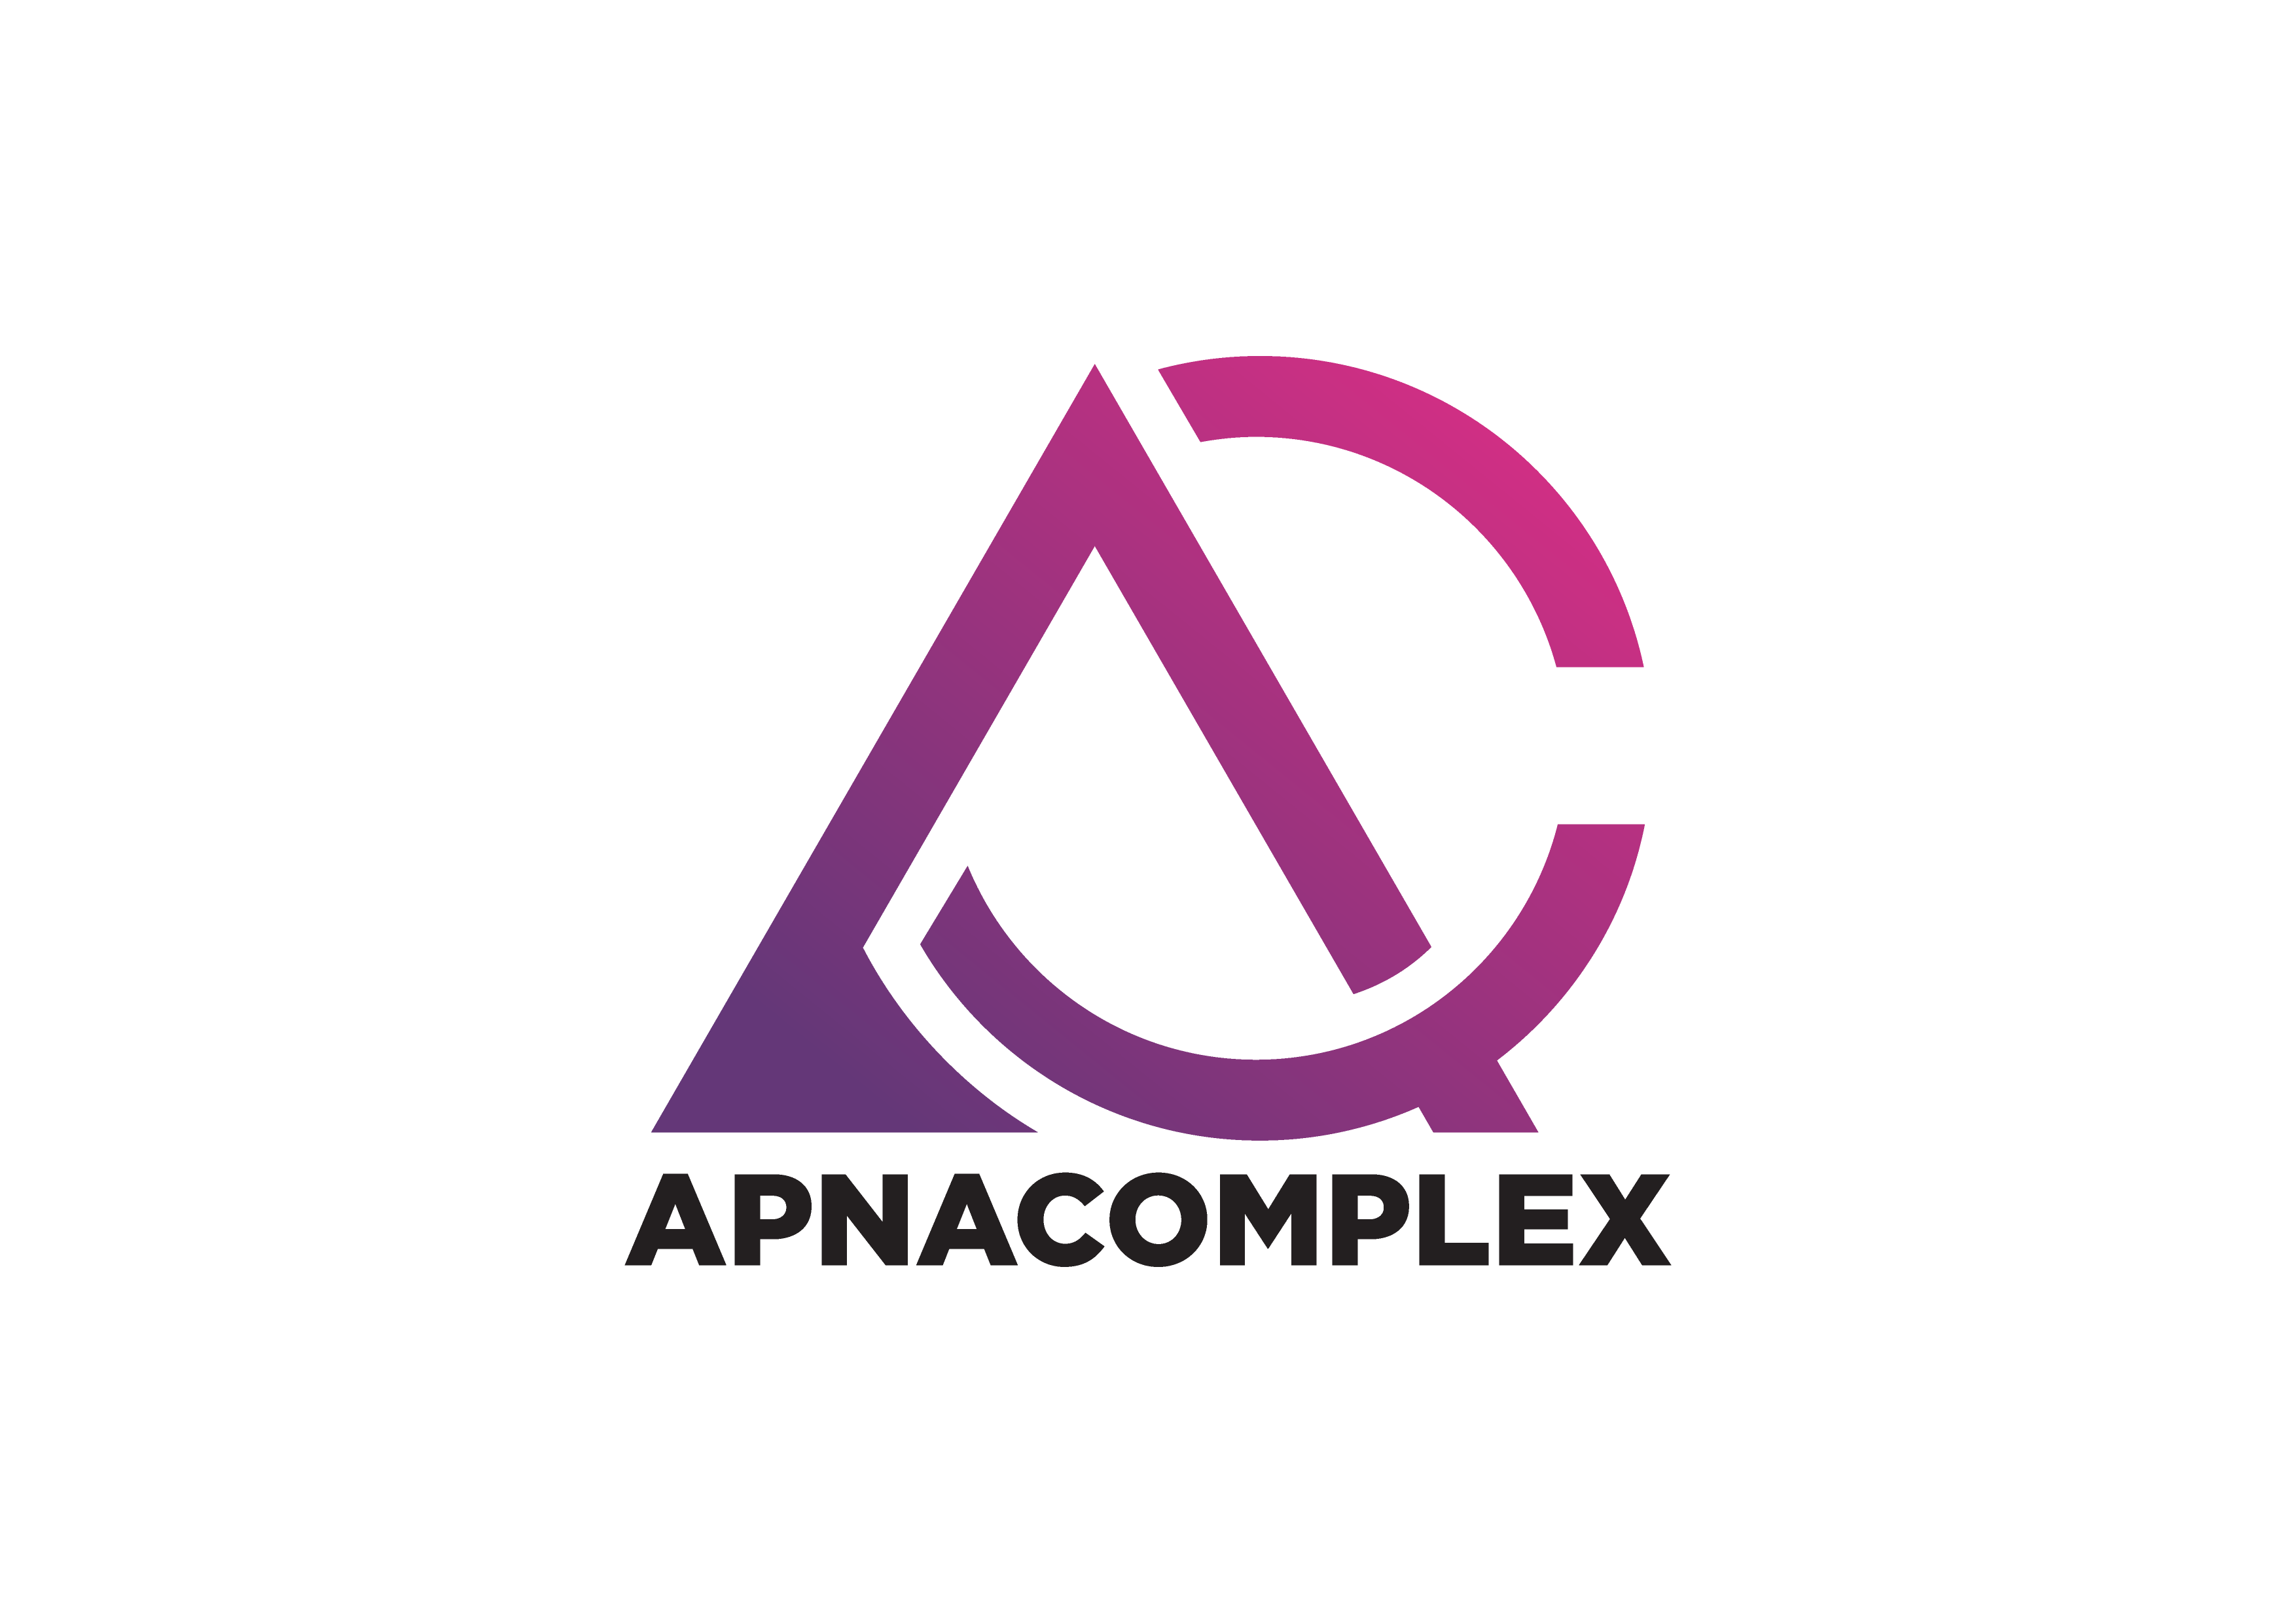 apnacomplex logo property management software